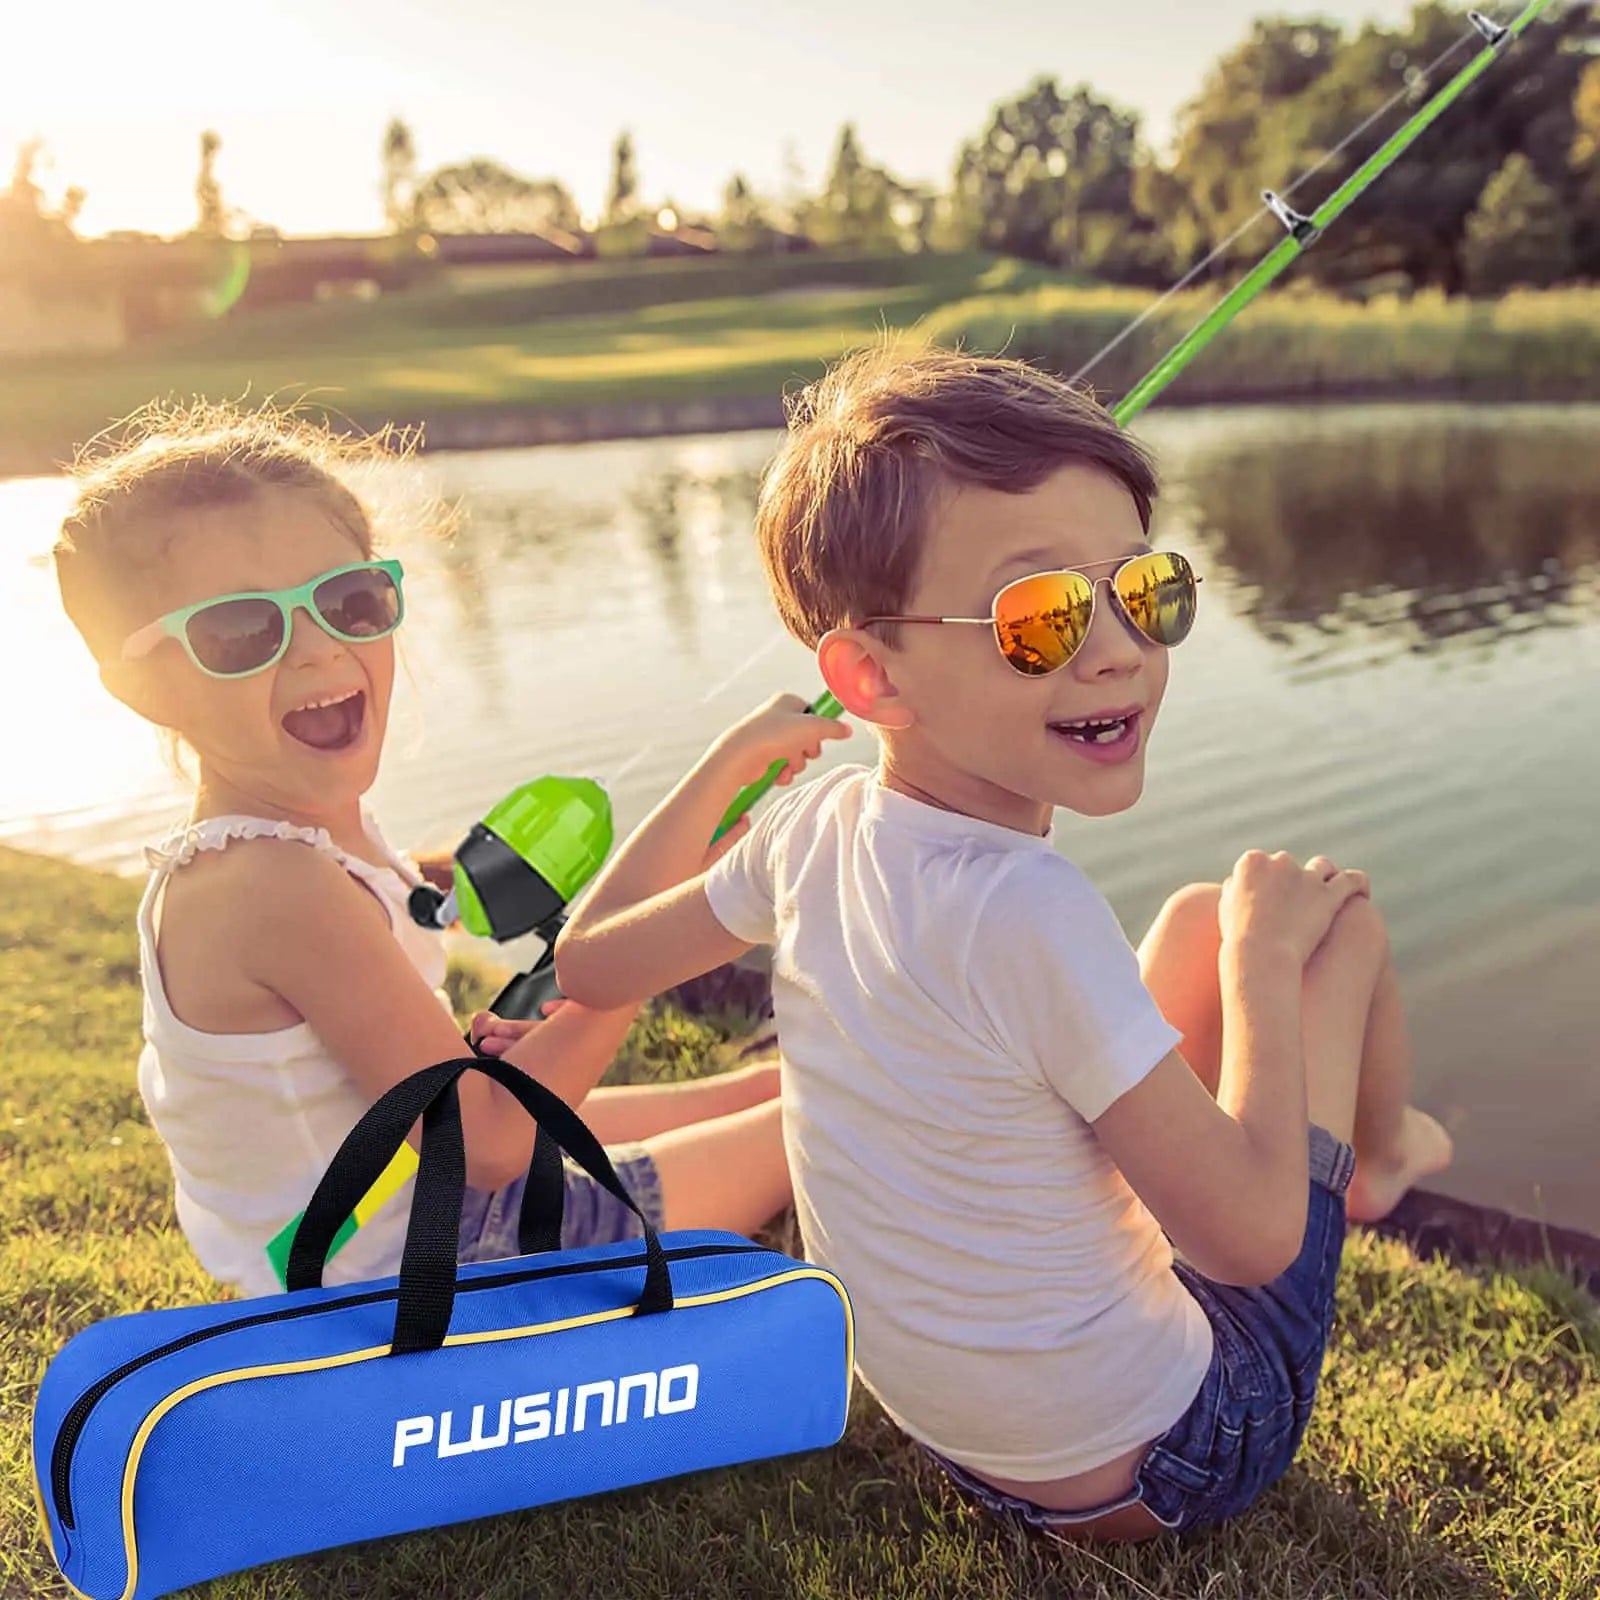 LEOFISHING Kids Fishing Pole Set with Full Starter Kits Portable